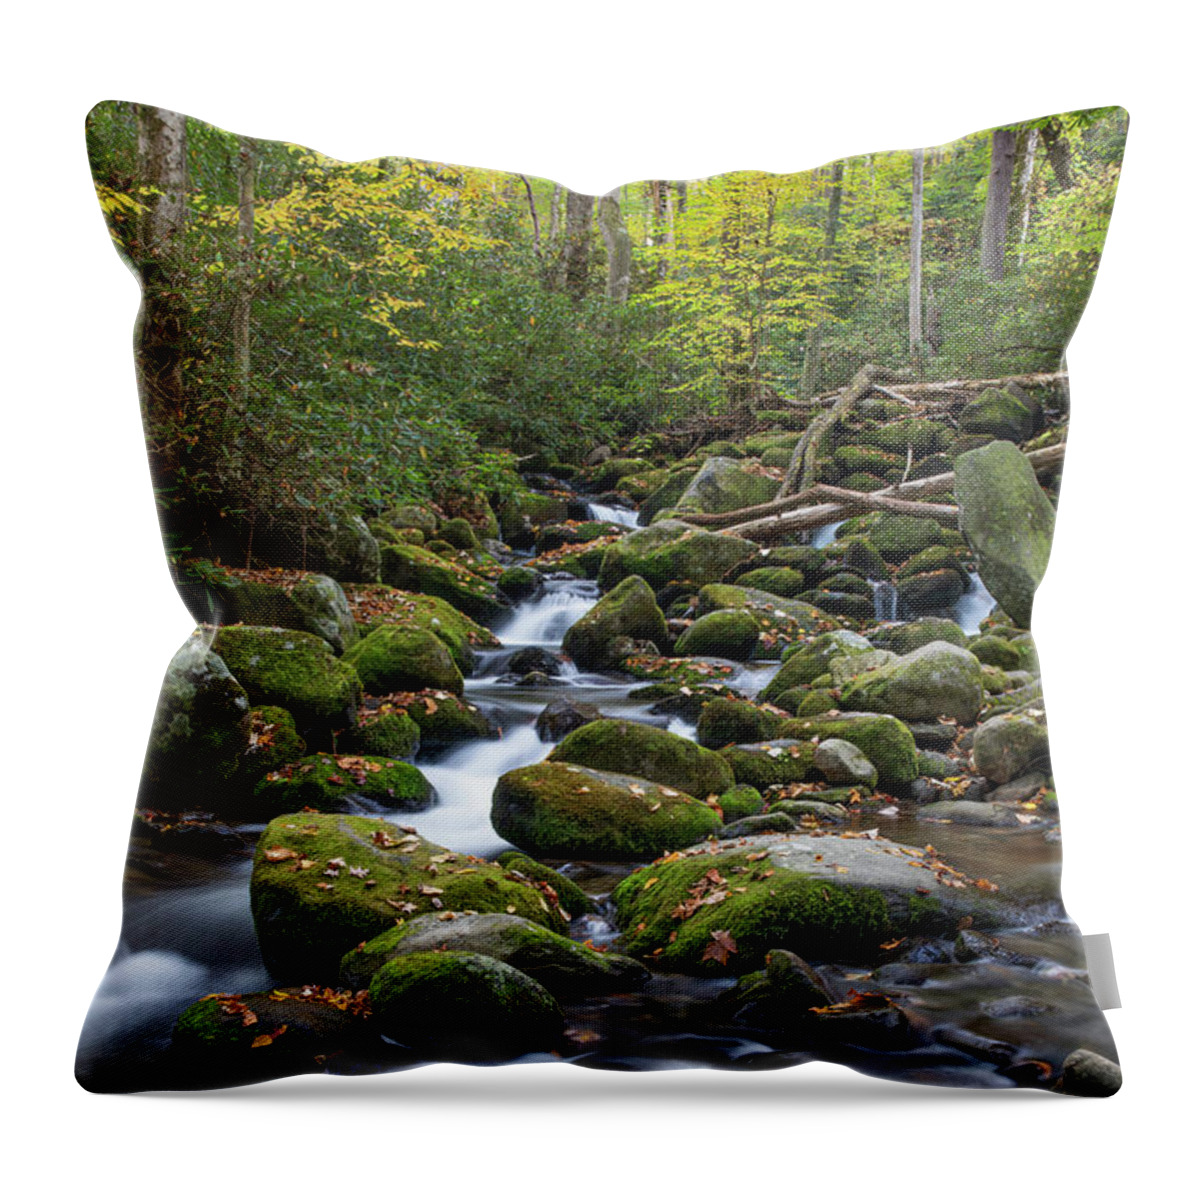 Art Prints Throw Pillow featuring the photograph Cascade 2 by Nunweiler Photography